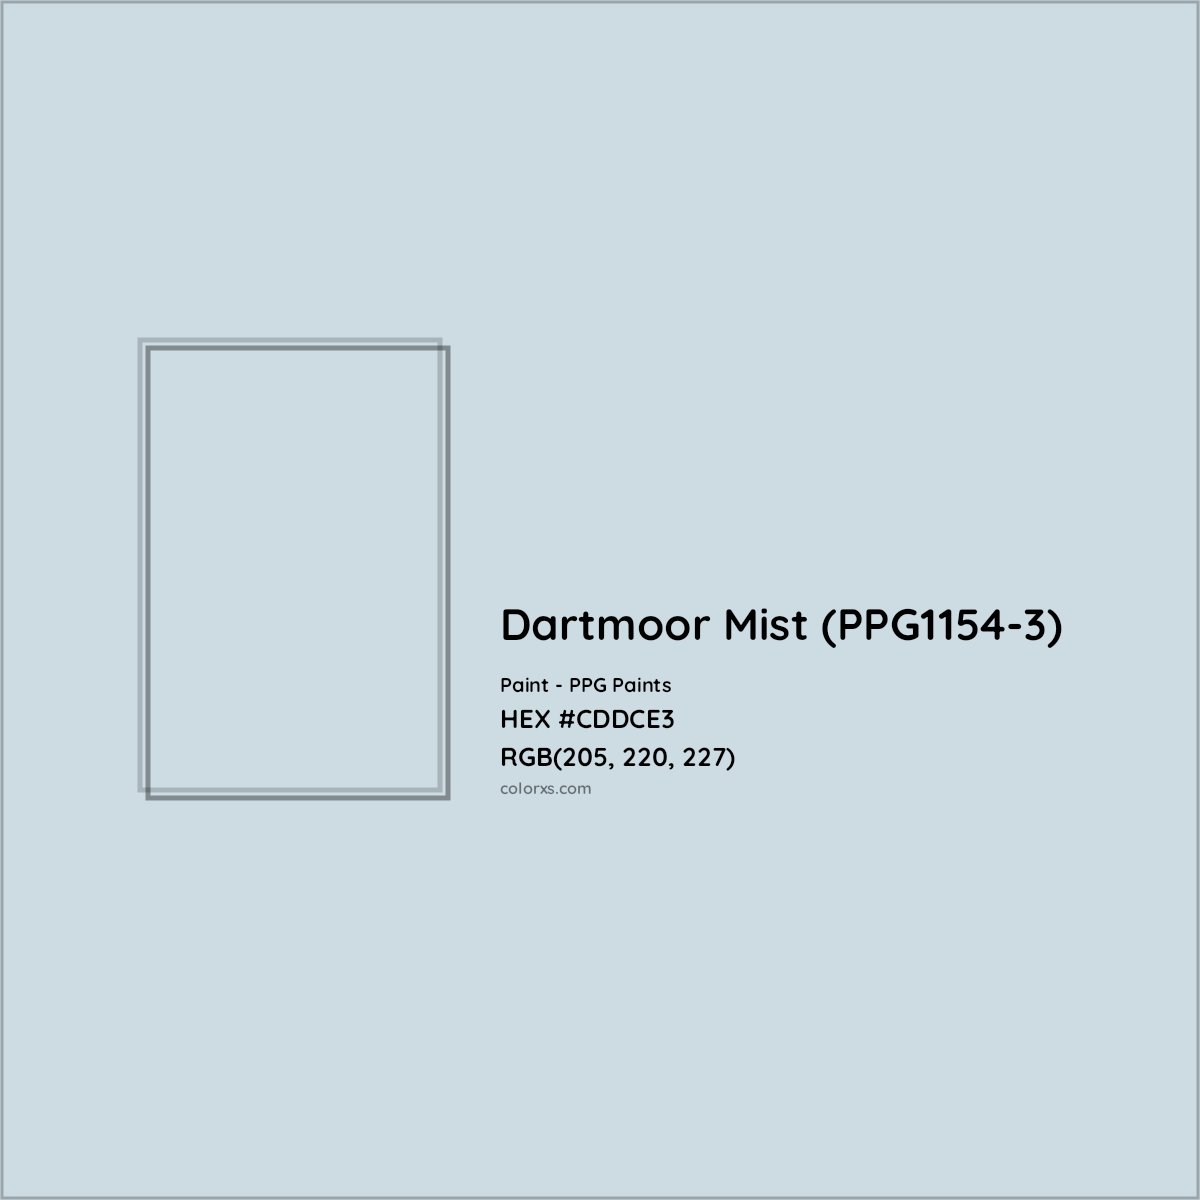 HEX #CDDCE3 Dartmoor Mist (PPG1154-3) Paint PPG Paints - Color Code